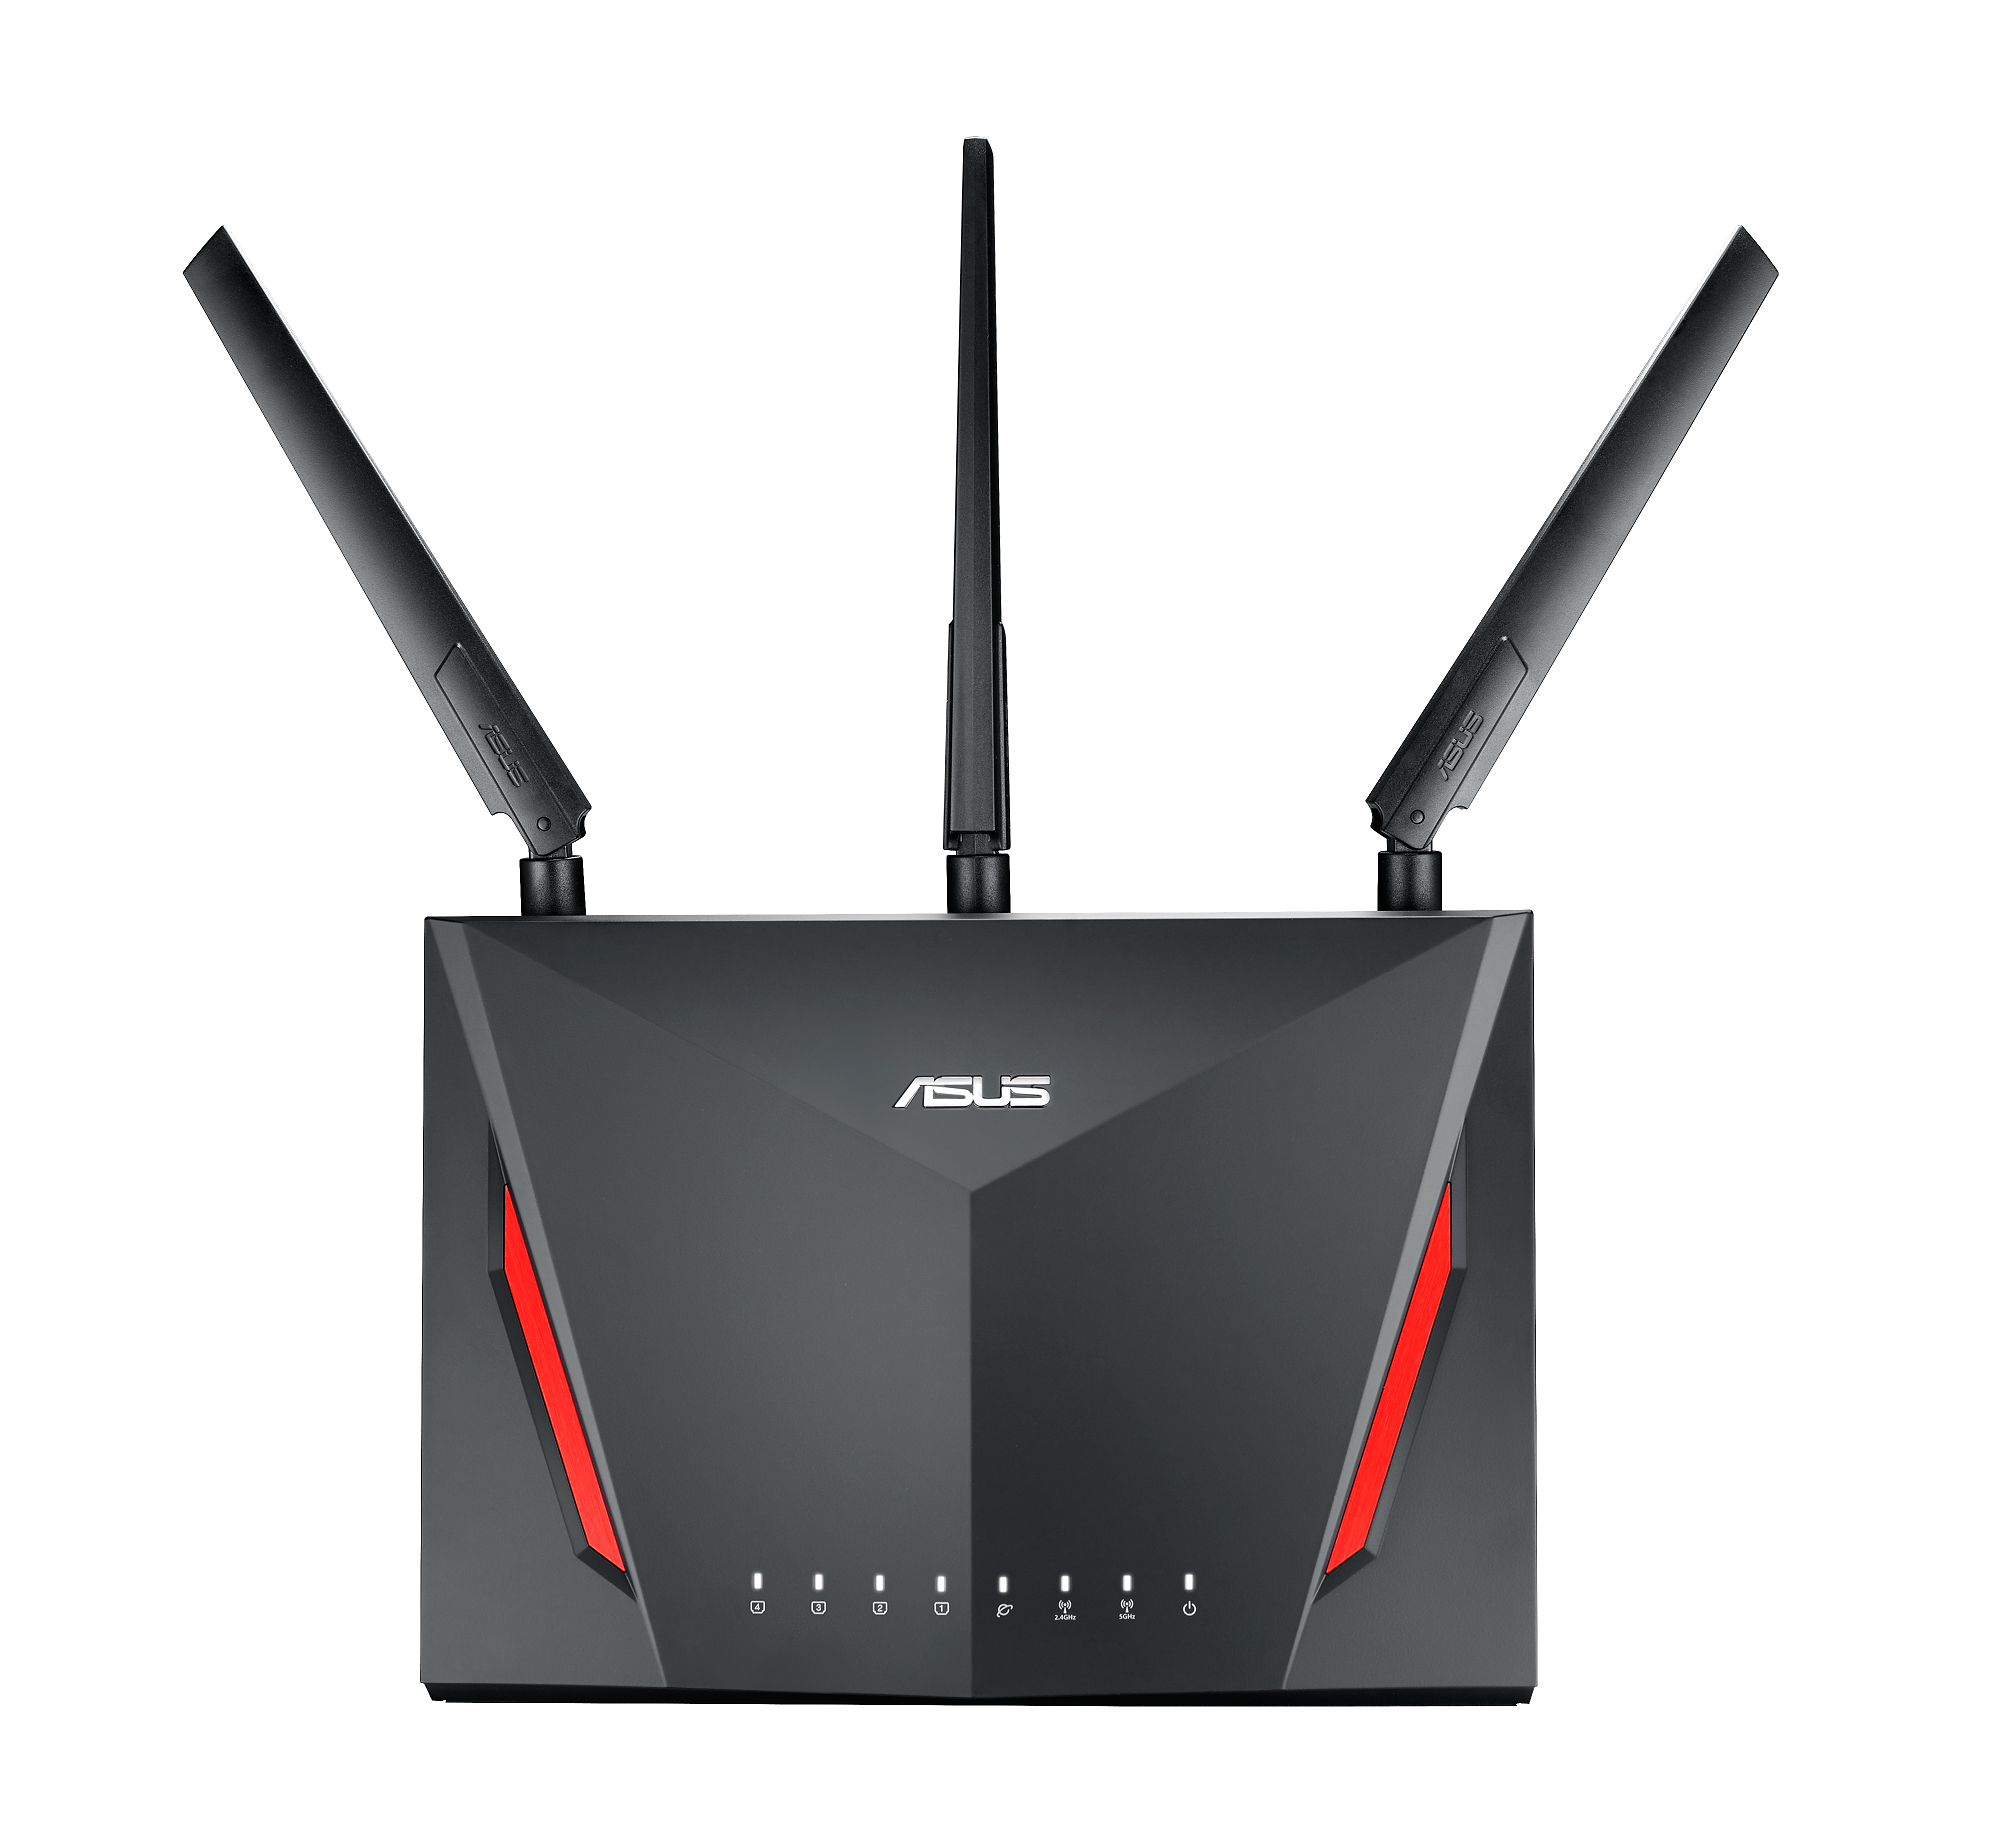 ASUS giới thiệu Wi-Fi Router RT-AC86U, streaming 4K, NitroQAM, MU-MIMO